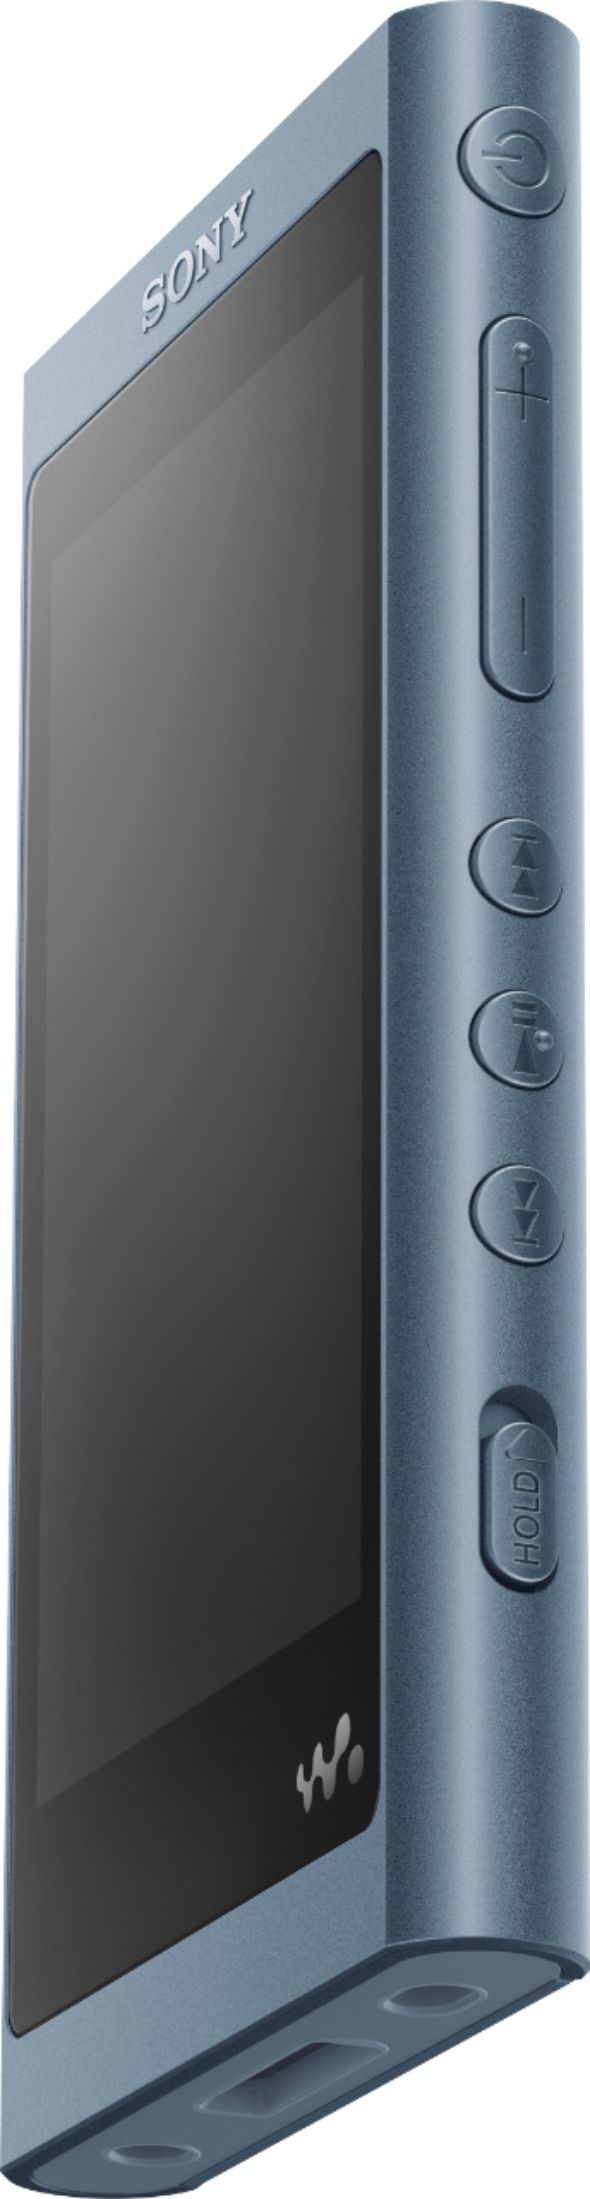 Best Buy: Sony Walkman NW-A55 Hi-Res 16GB* MP3 Player Moonlight